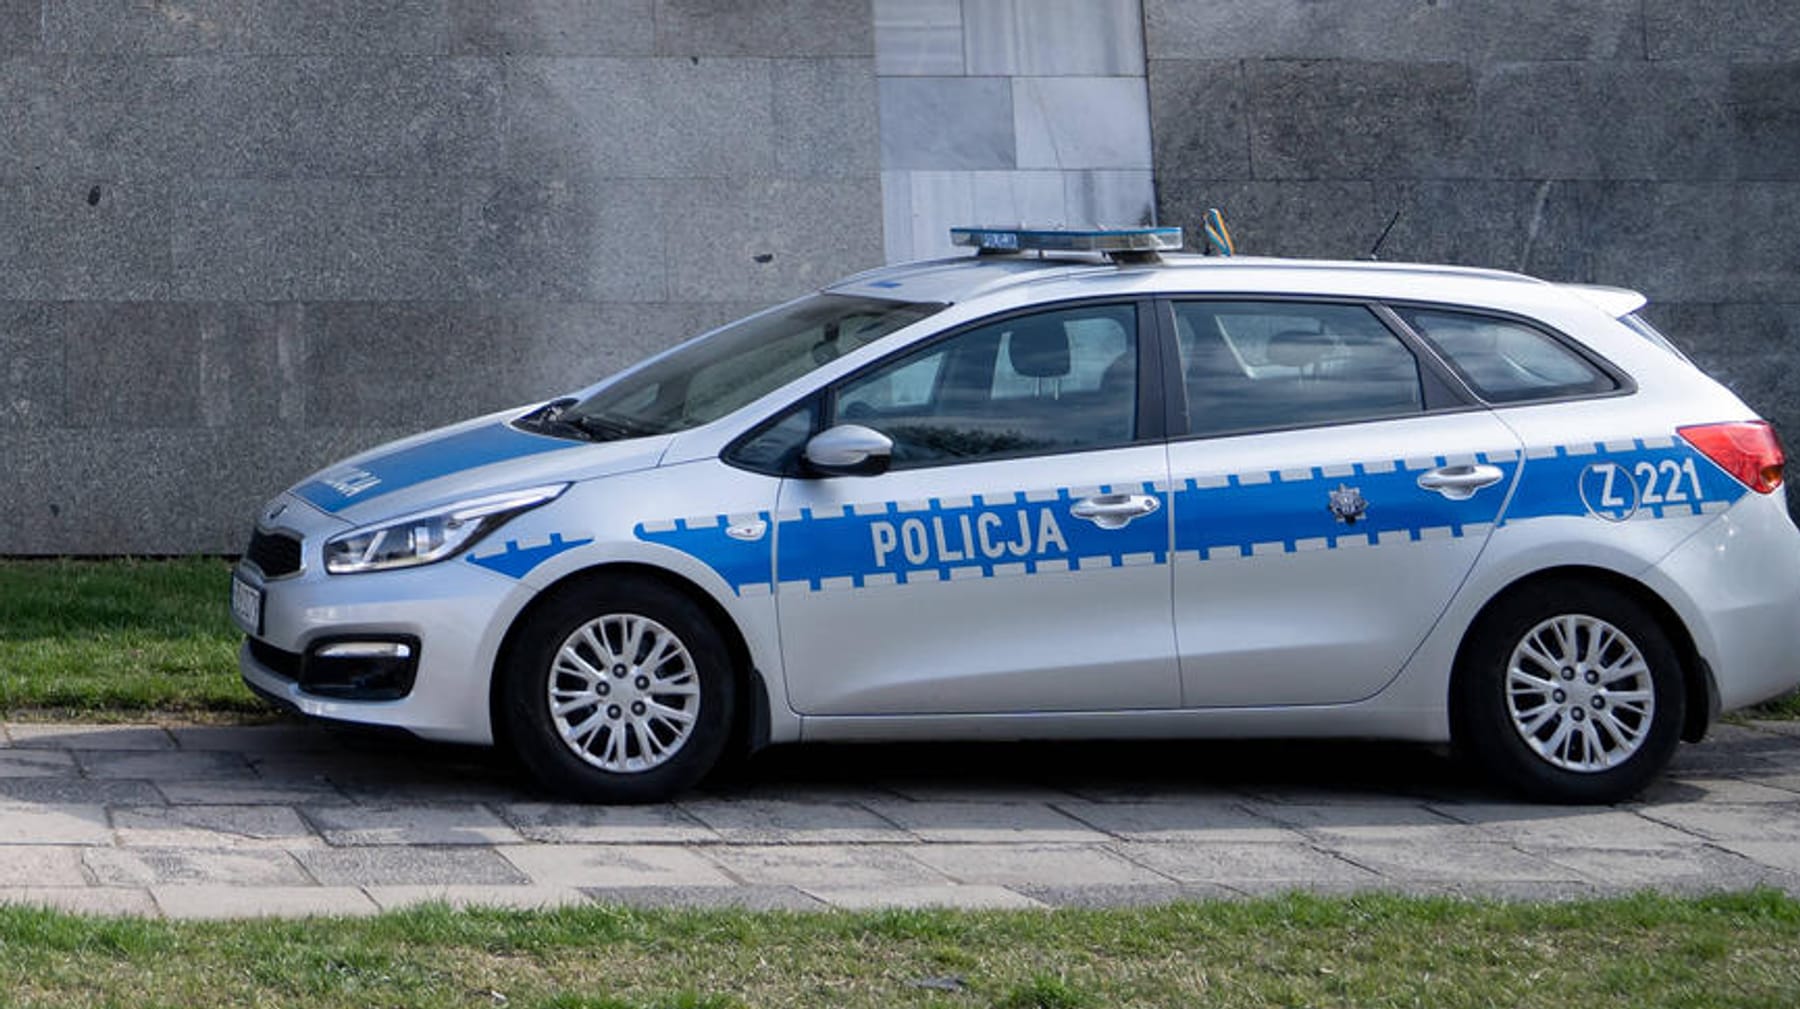 A car runs over a crowd in Stettin – 17 injured